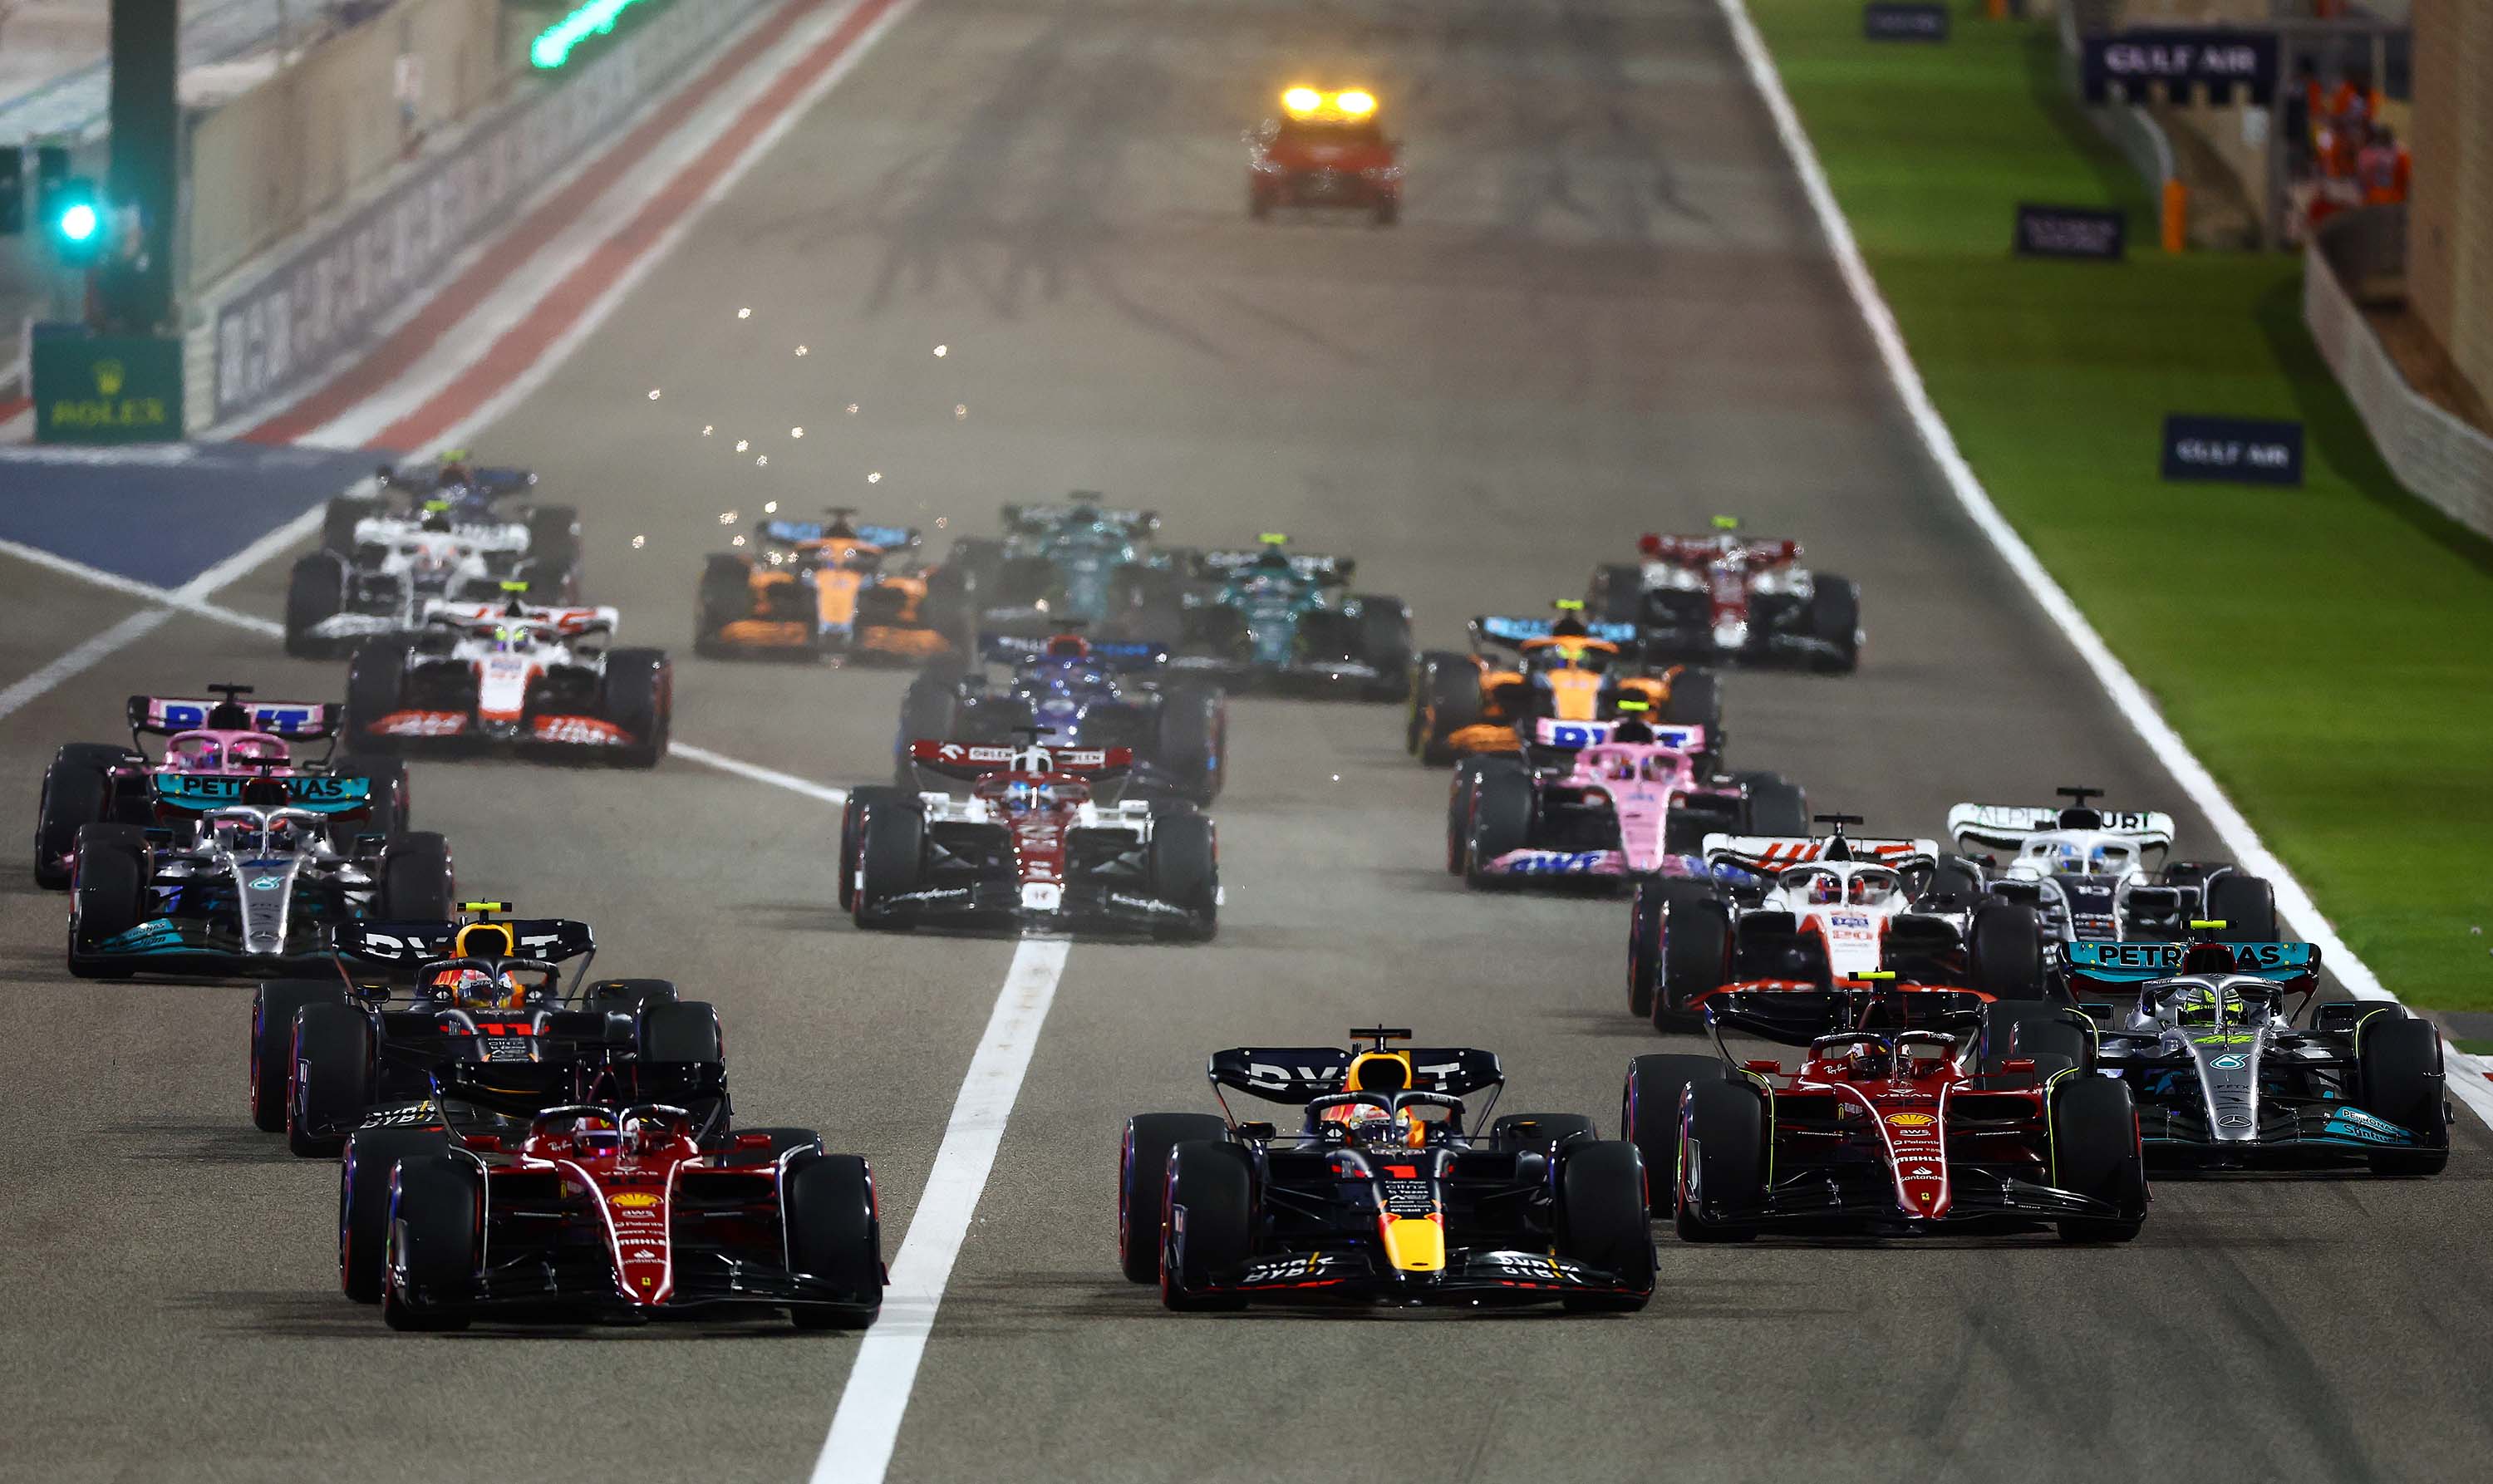 Bahrain Grand Prix 2022 - F1 Race